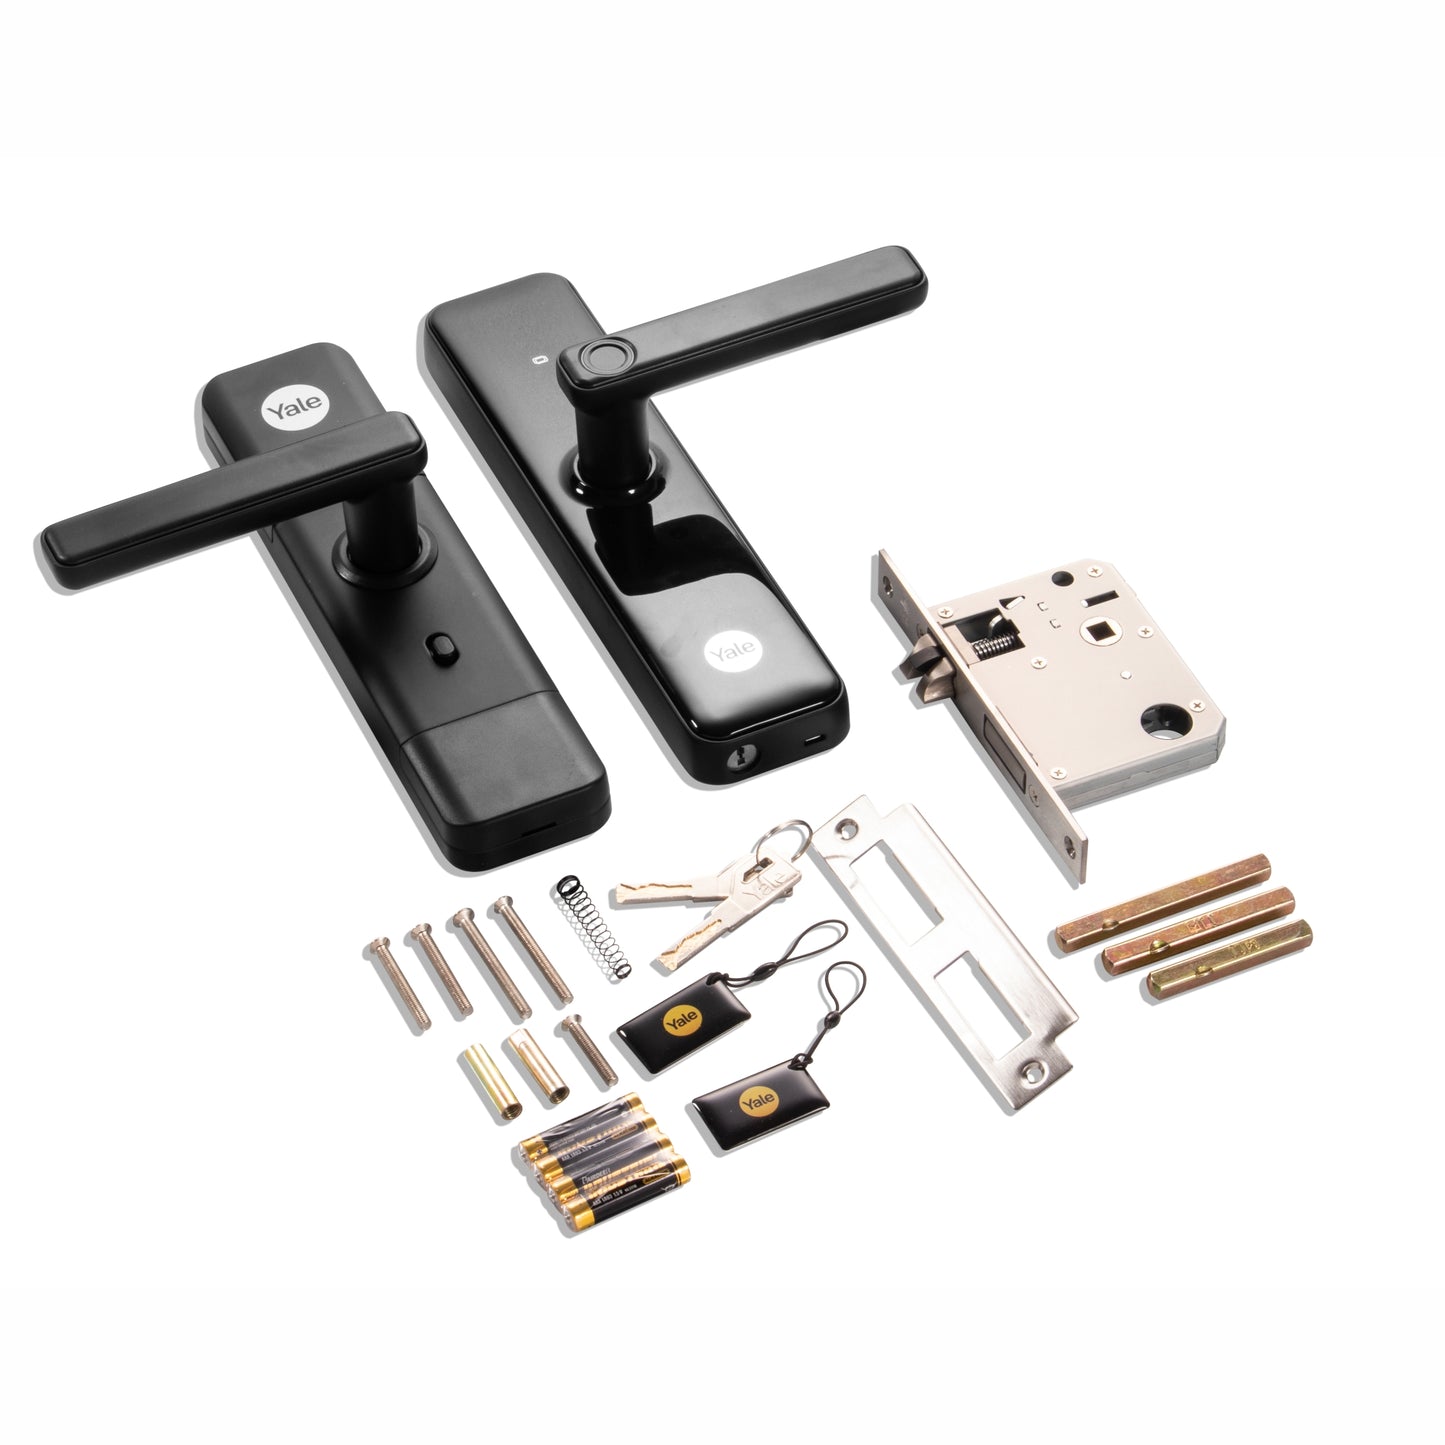 YDME50NxT Smart Door Lock, Black, Fingerprint, PIN, RFID, Manual Key Access